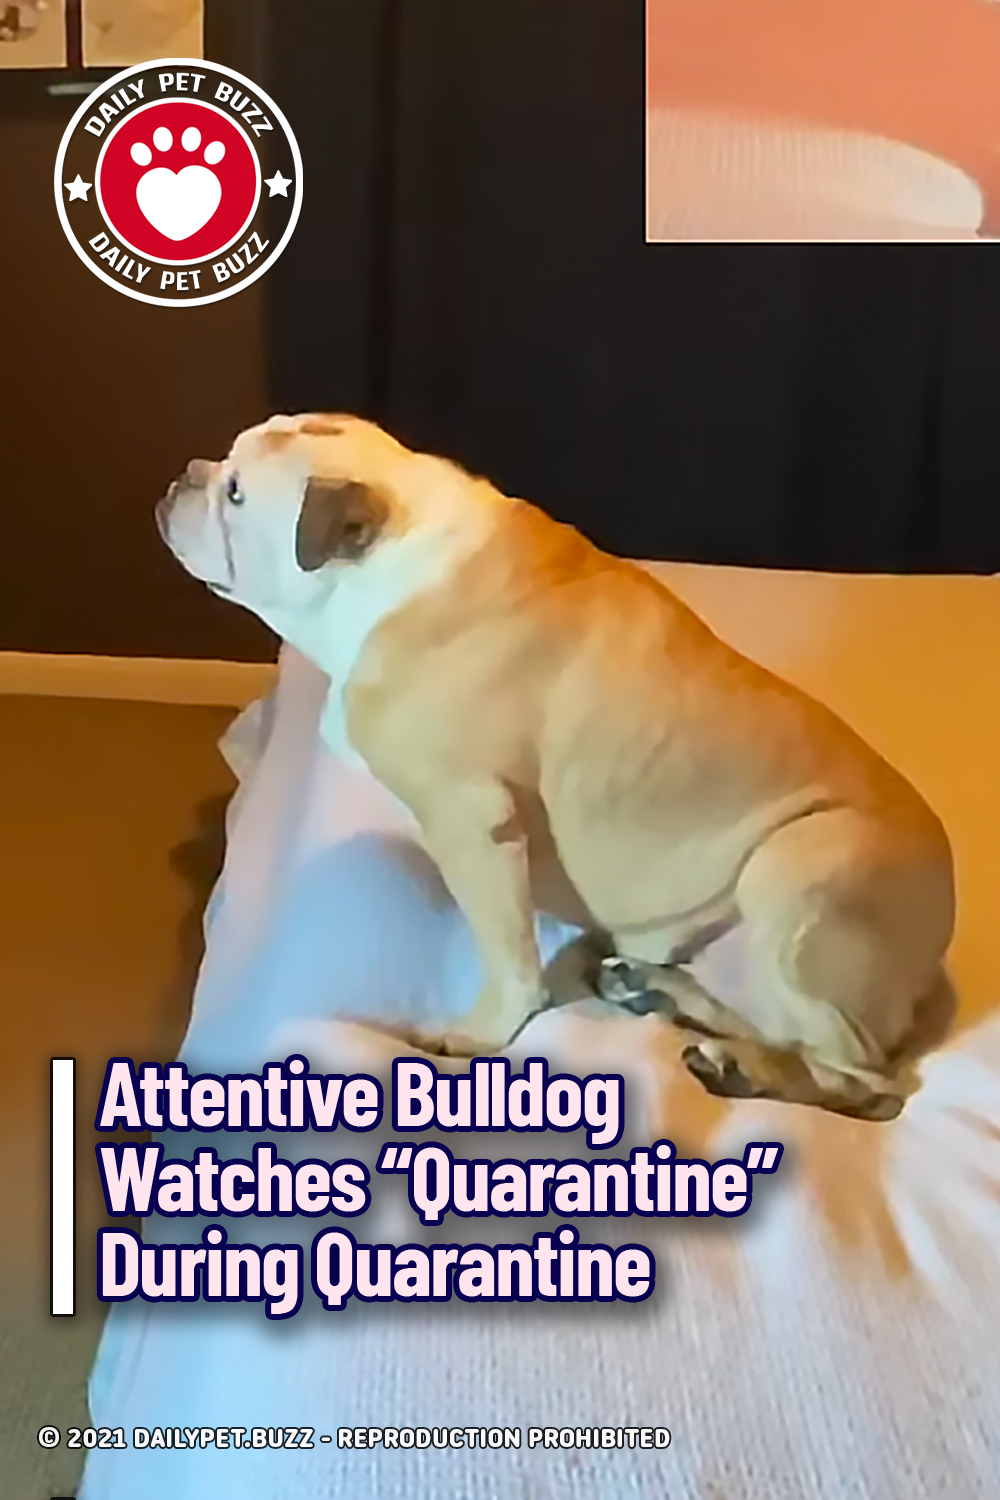 Attentive Bulldog Watches “Quarantine” During Quarantine